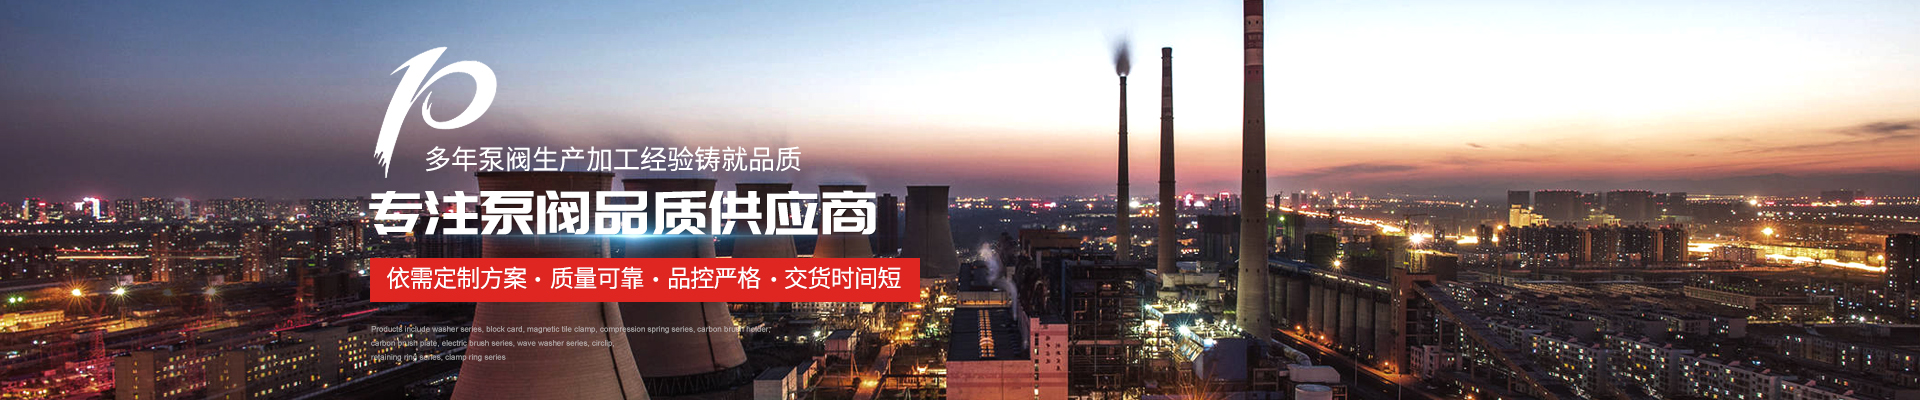 3CF控制柜|消防柜「廠家」 - 上海高適泵閥有限公司